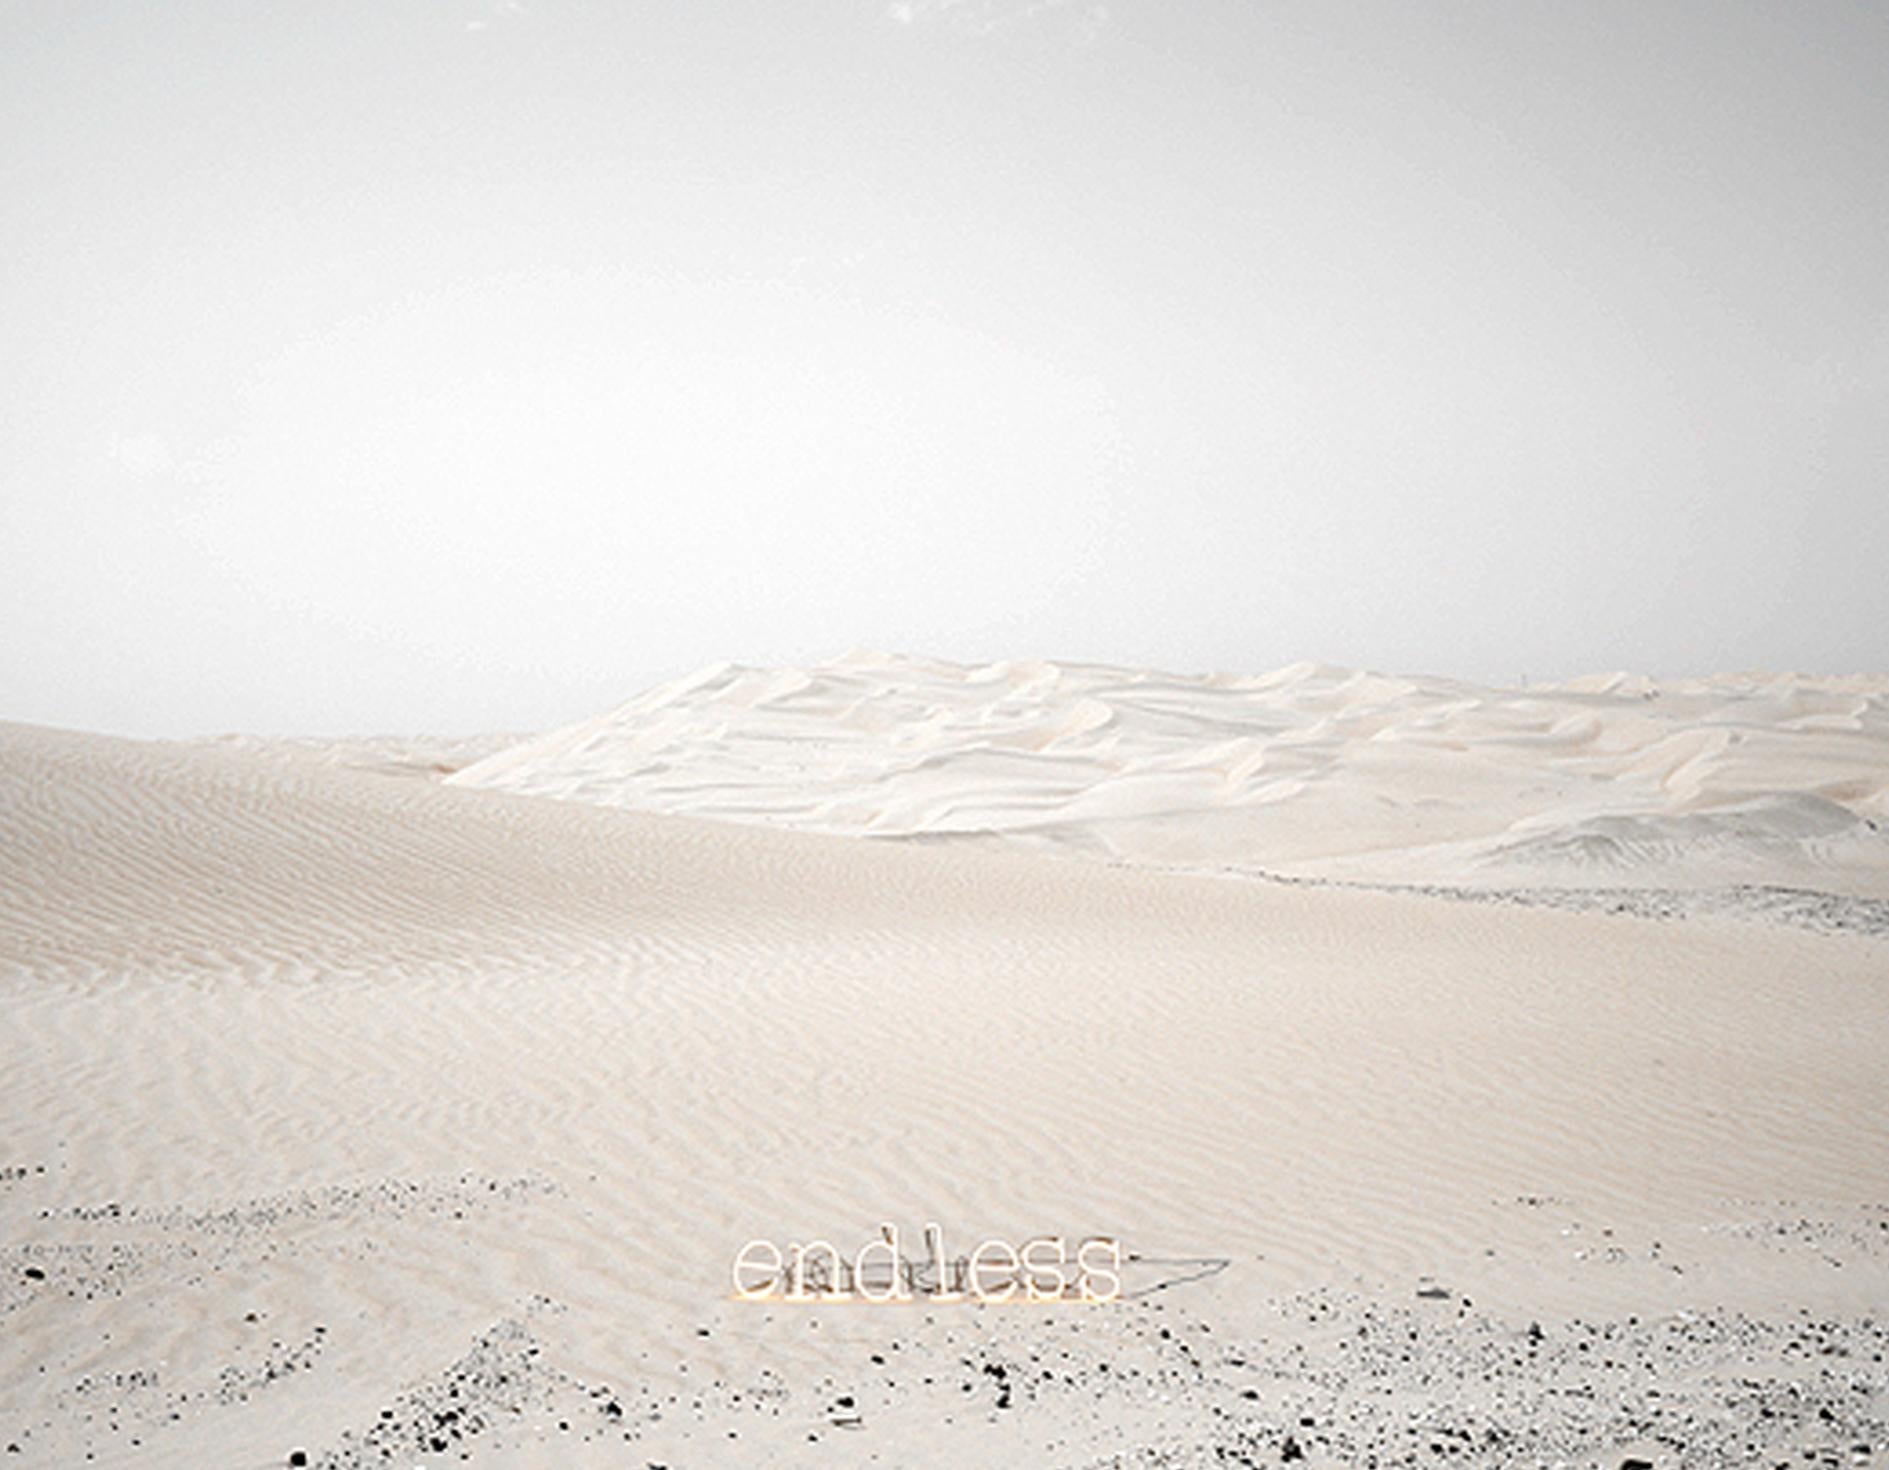 Endless Desert Stone, The Dream Art Project - Conceptual Photograph by Anne Valverde